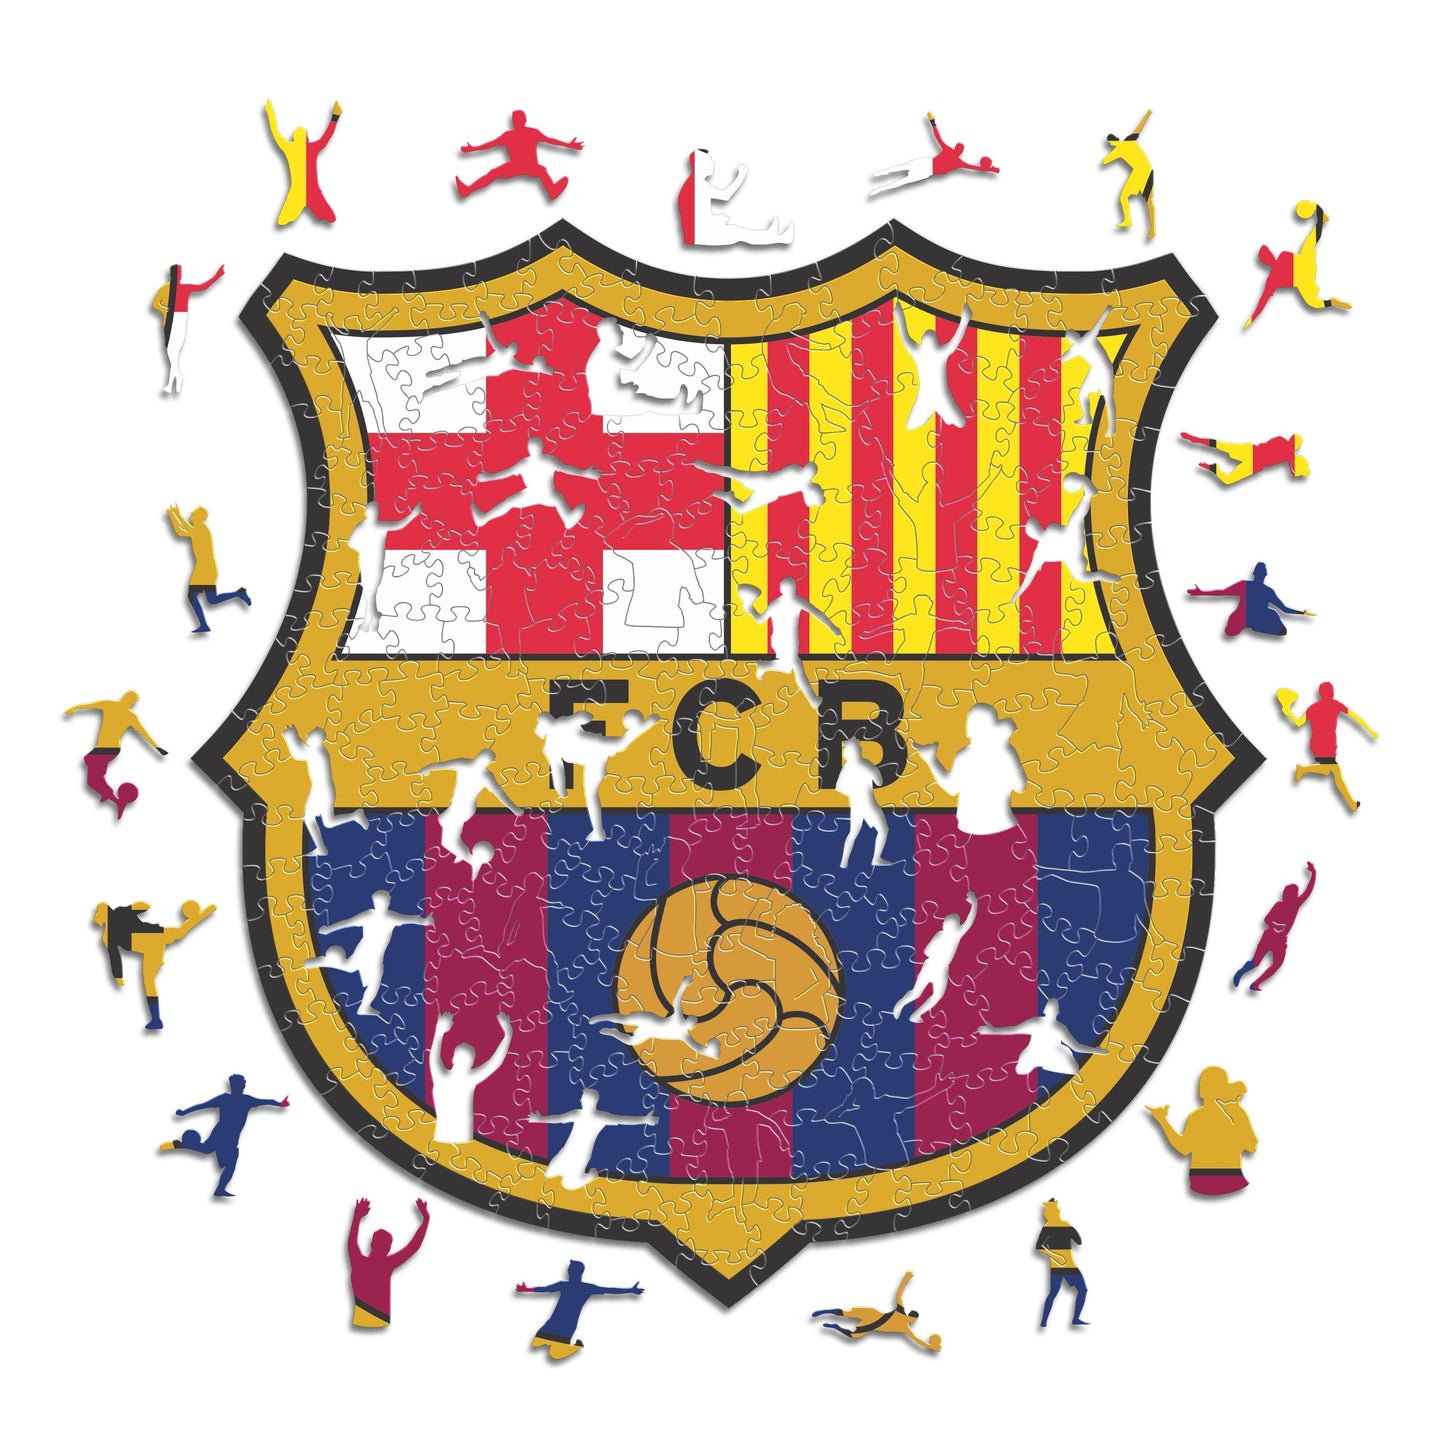 FC Barcelona® Crest - Wooden Puzzle